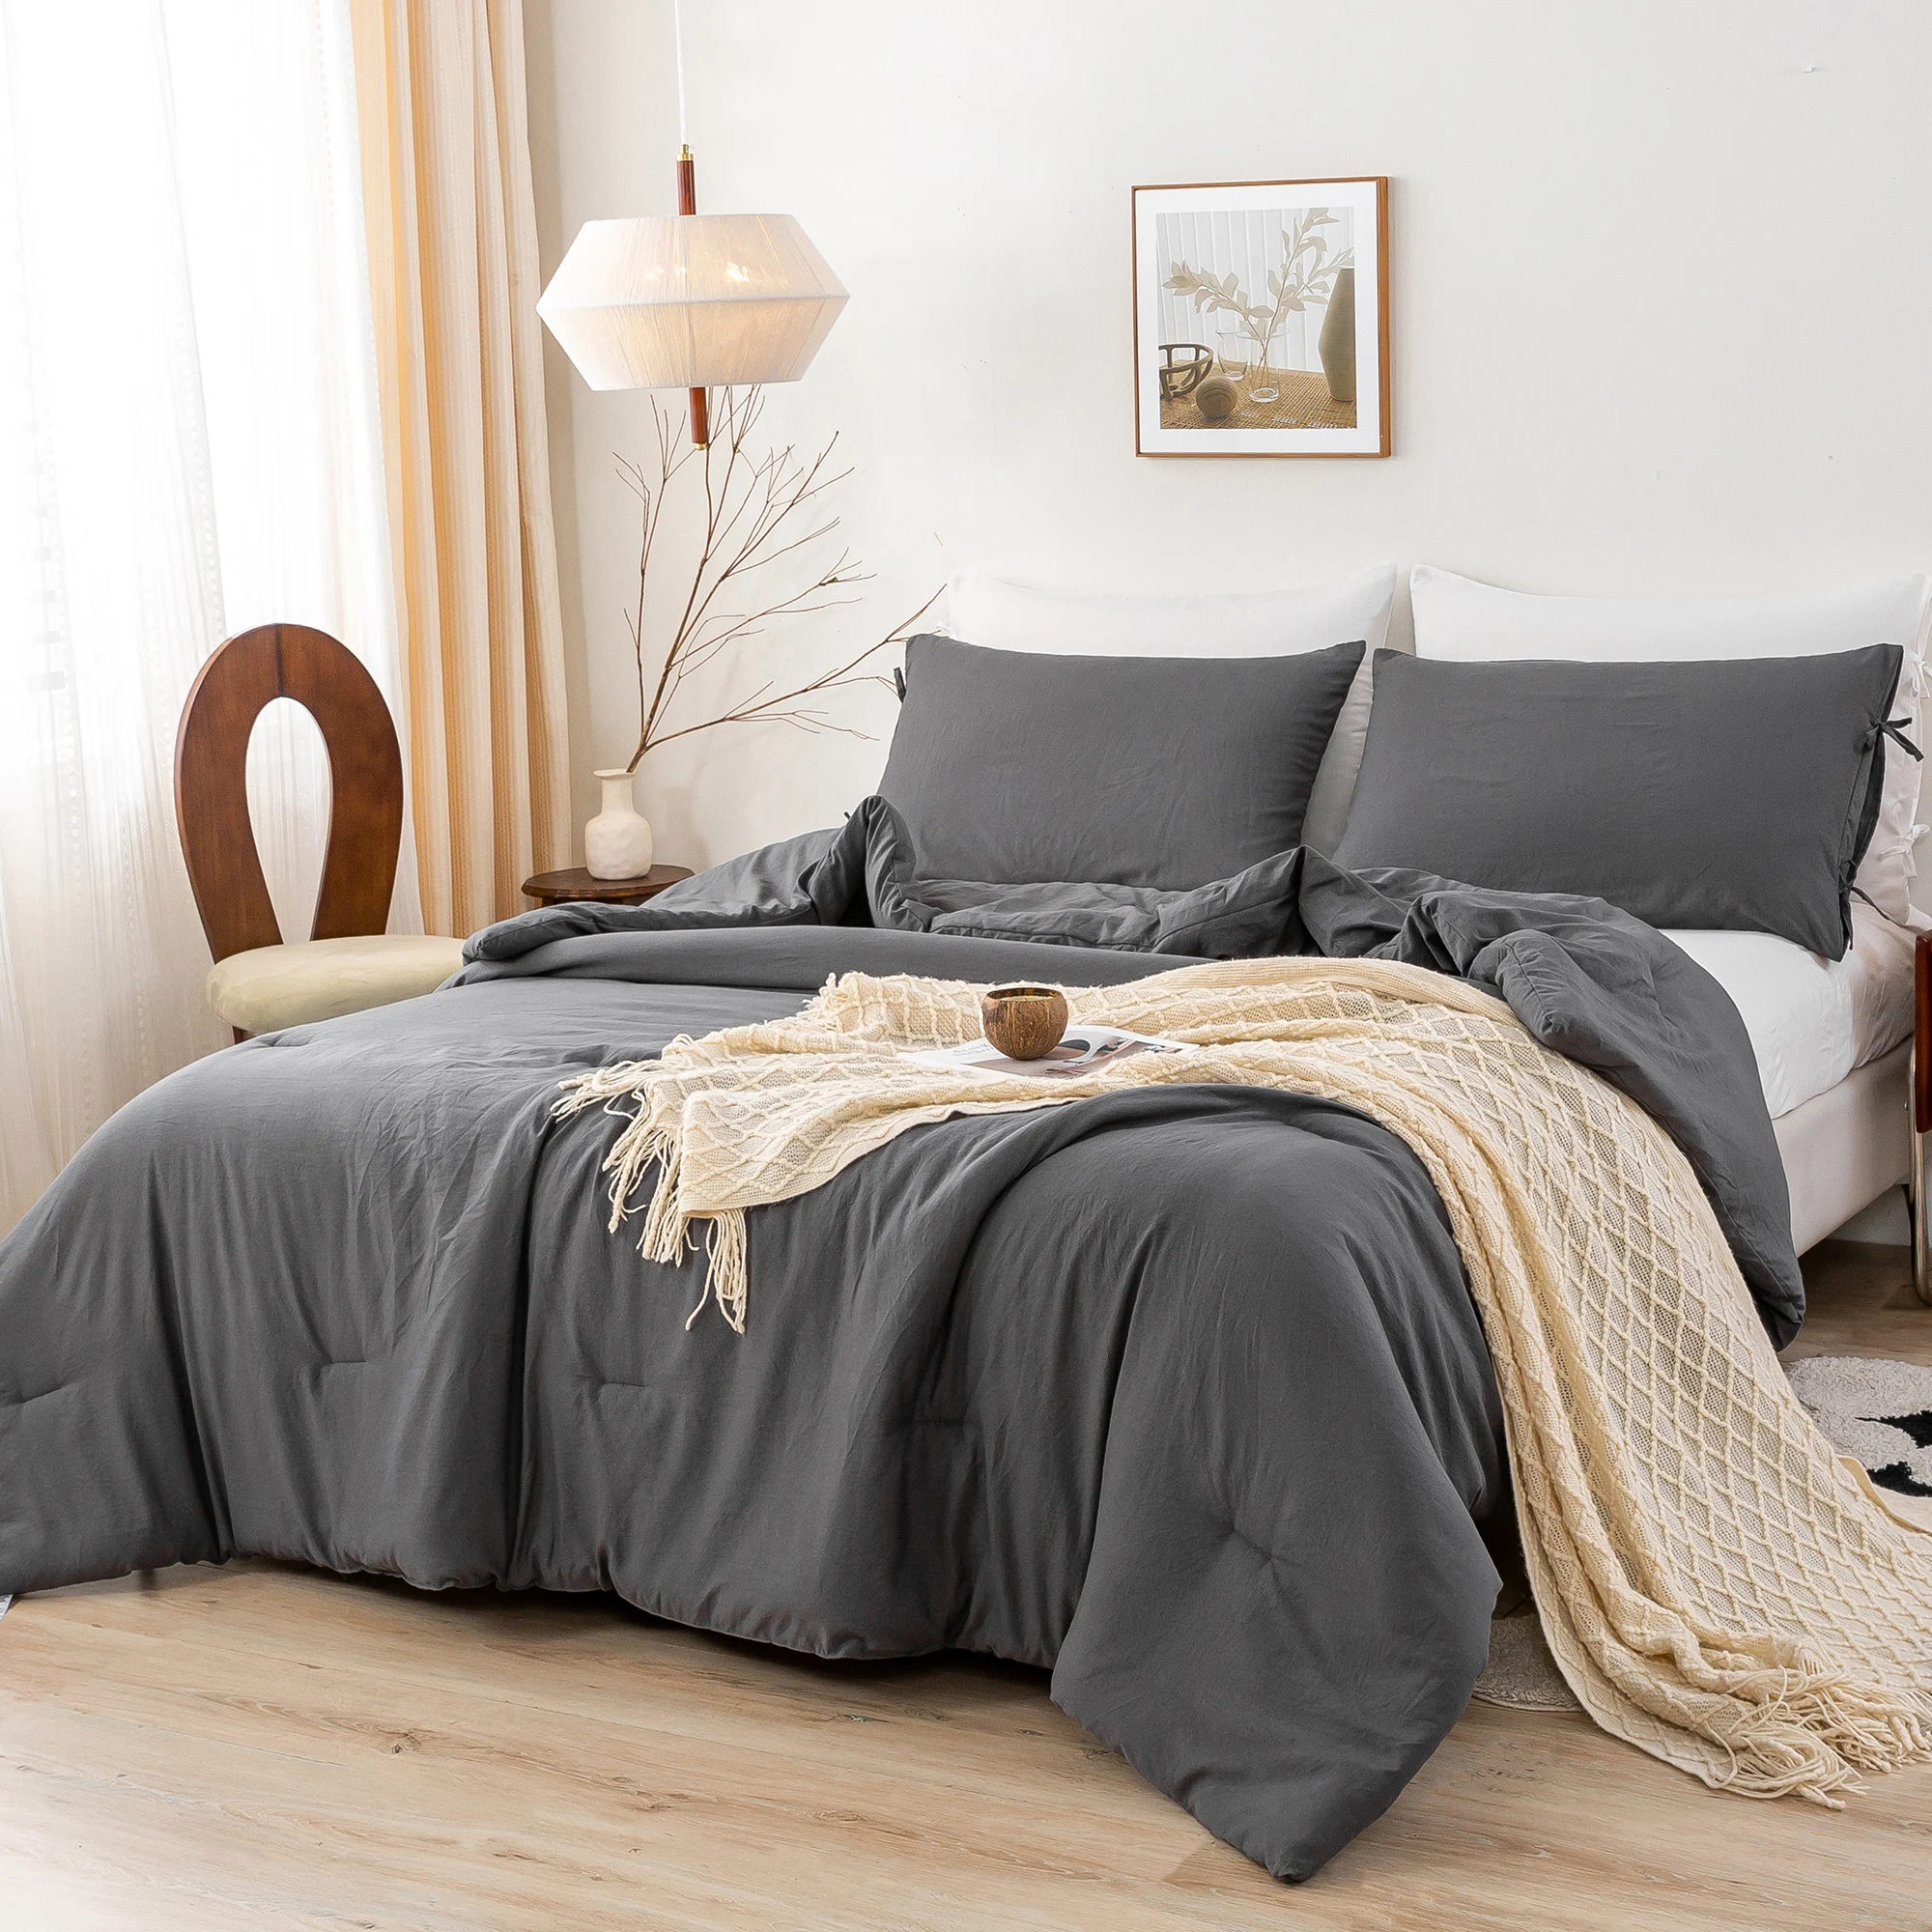 

Softness Twin XL Size Comforter Set Lightweight Cozy Modern Polycotton Bed Blanket for Kids 1 Down Alternative & 1 Pillowcase